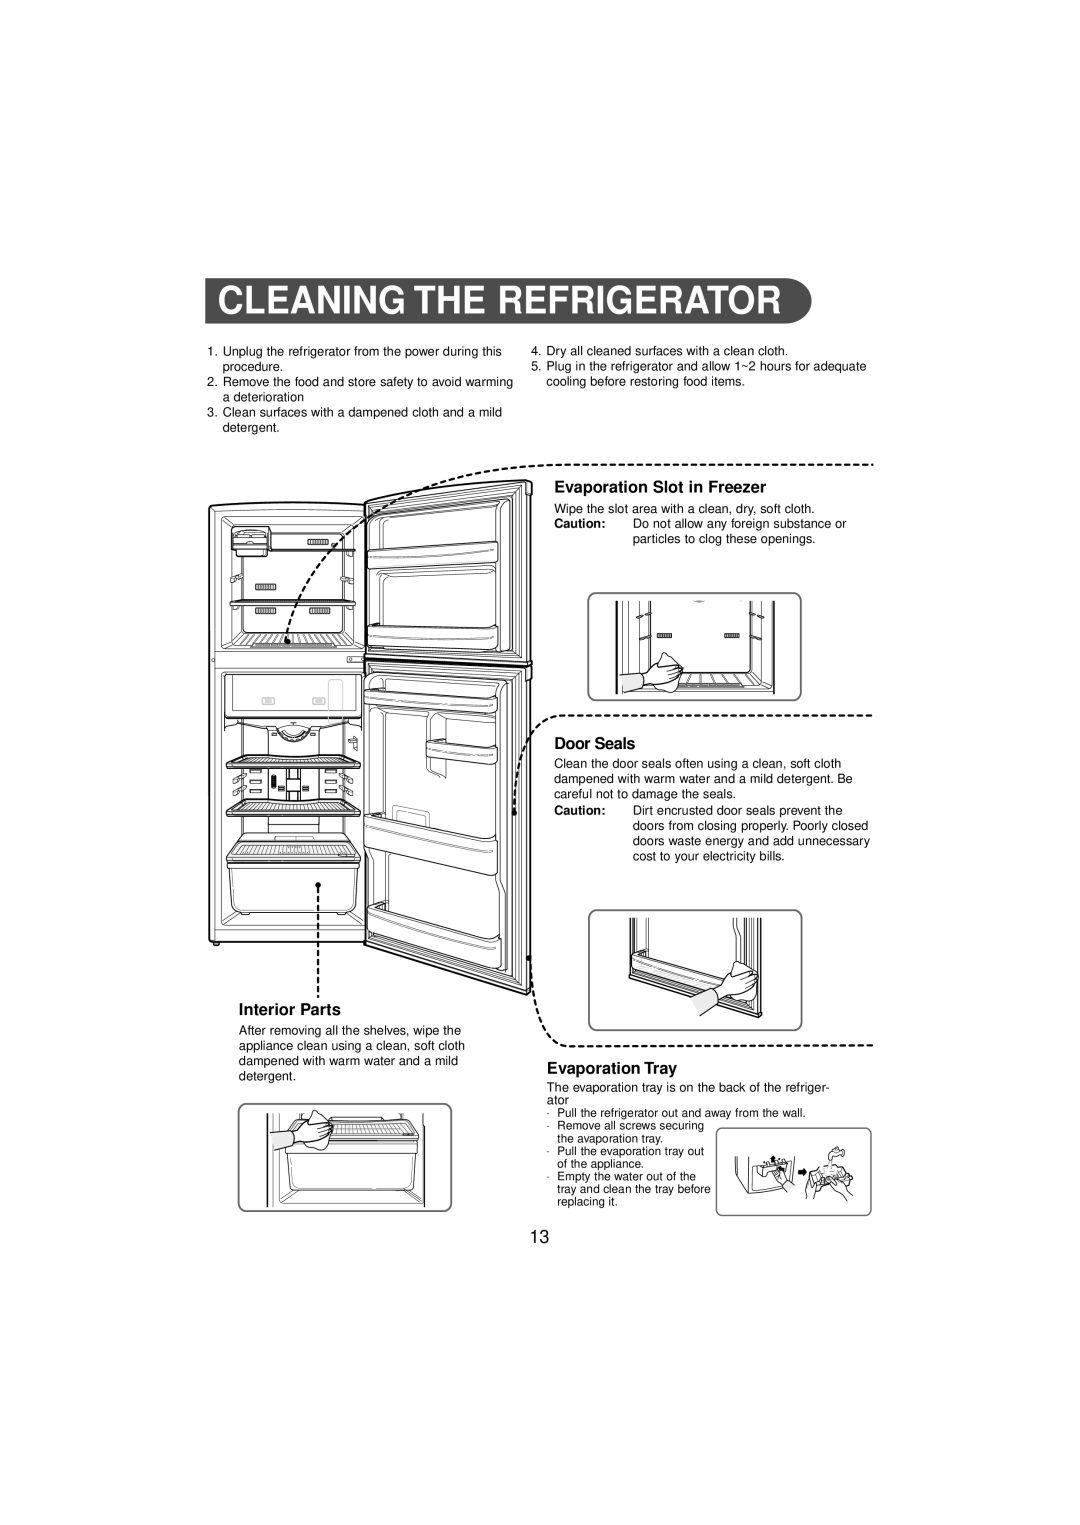 Samsung DA68-01454B Interior Parts, Evaporation Slot in Freezer, Door Seals, Evaporation Tray, Cleaning The Refrigerator 